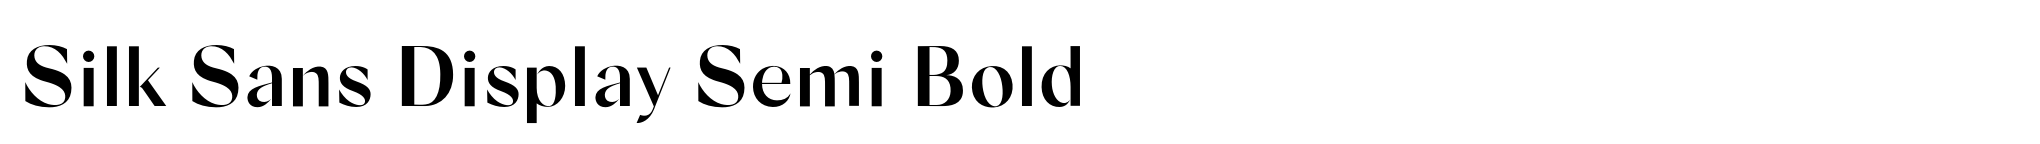 Silk Sans Display Semi Bold image